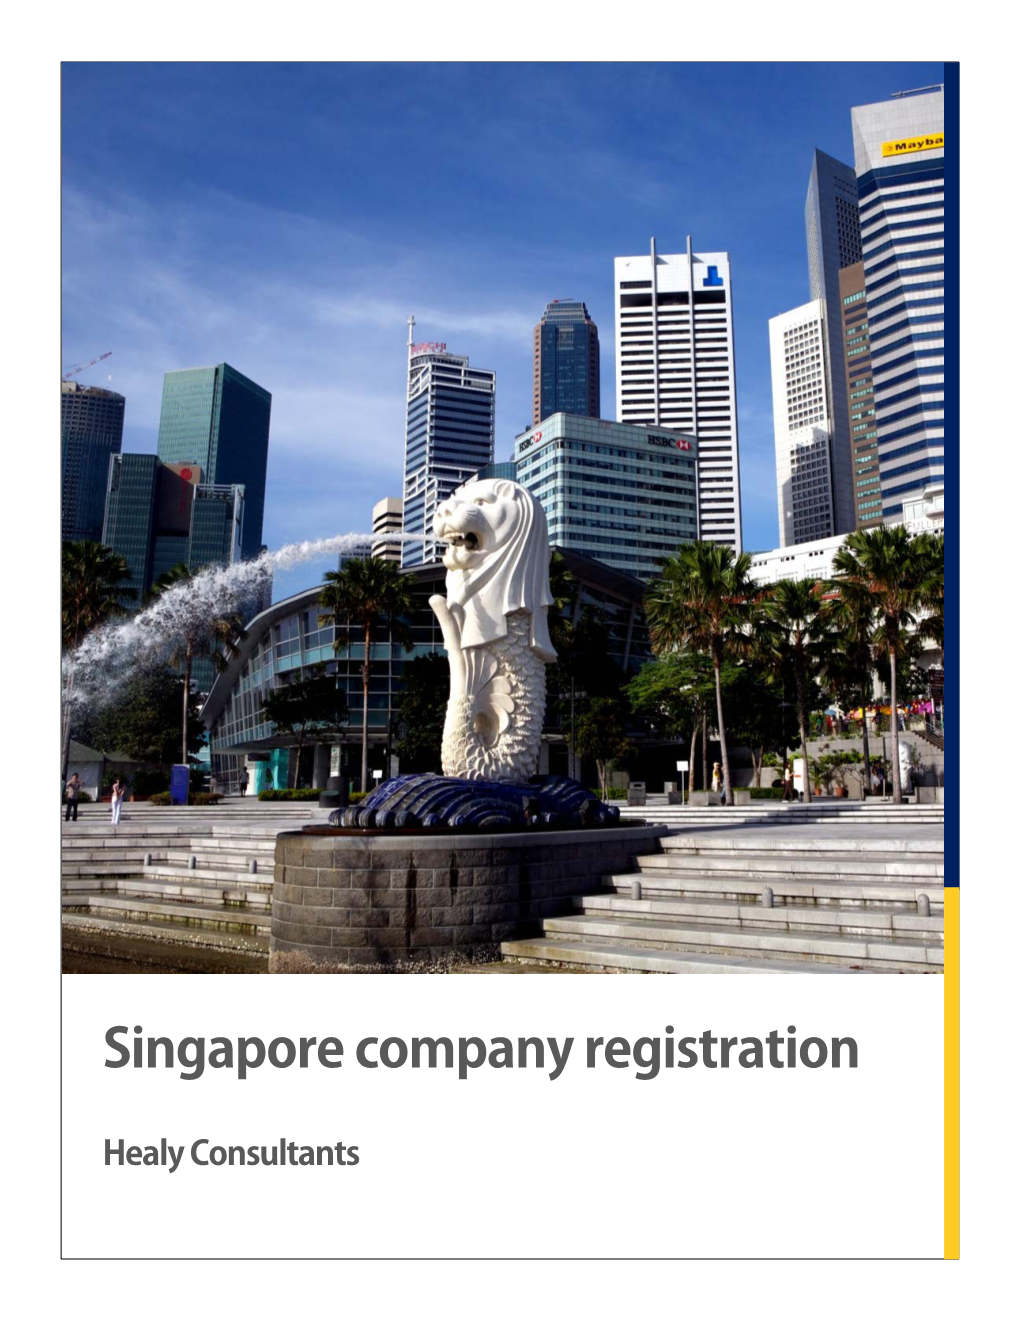 Singapore Company Registration